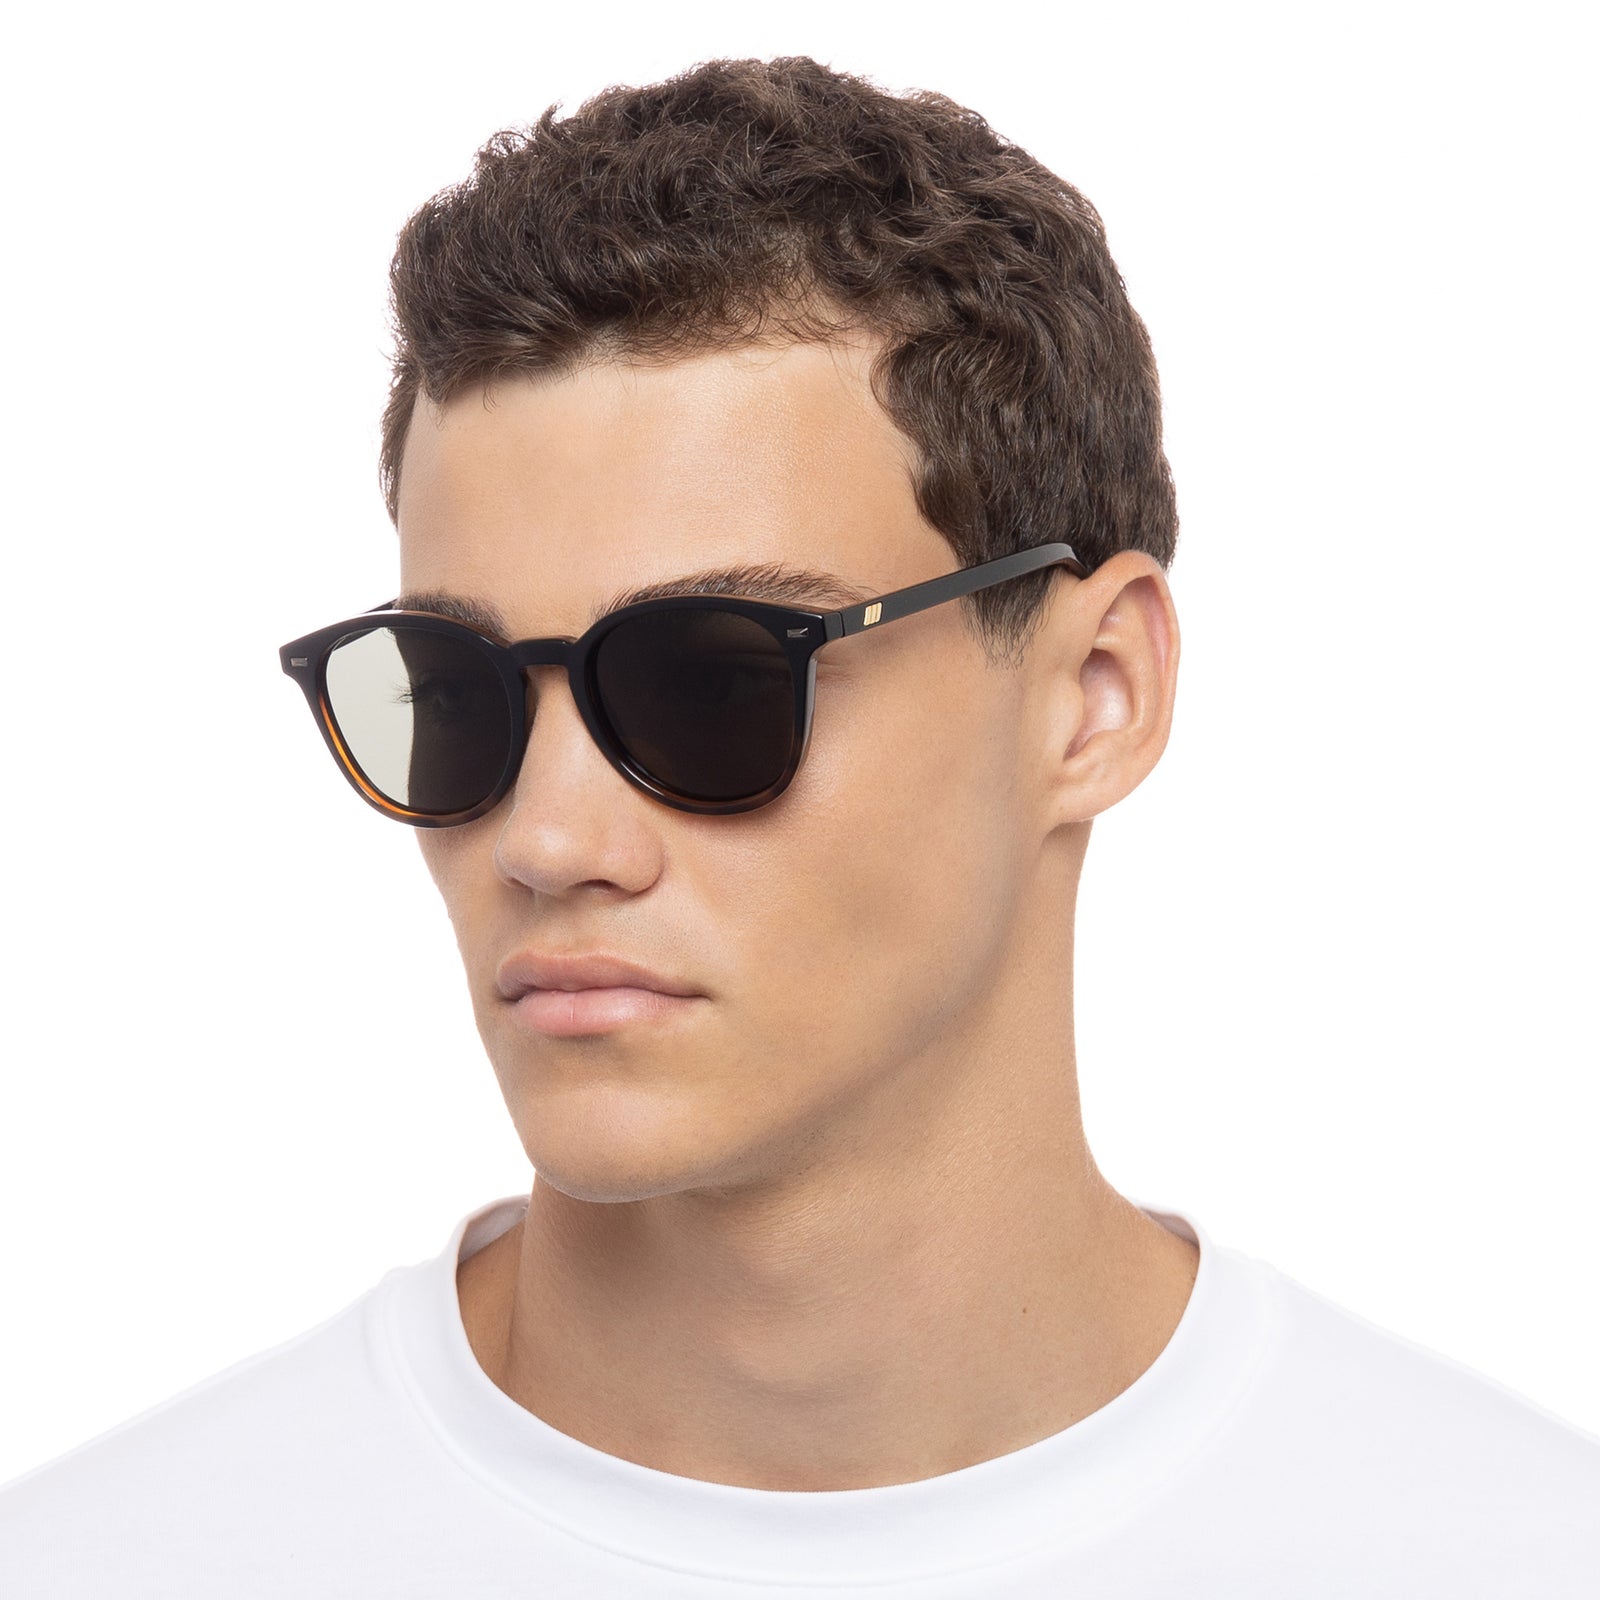 Uni-Sex Le Sunglasses Bandwagon Round Tort Specs Black |